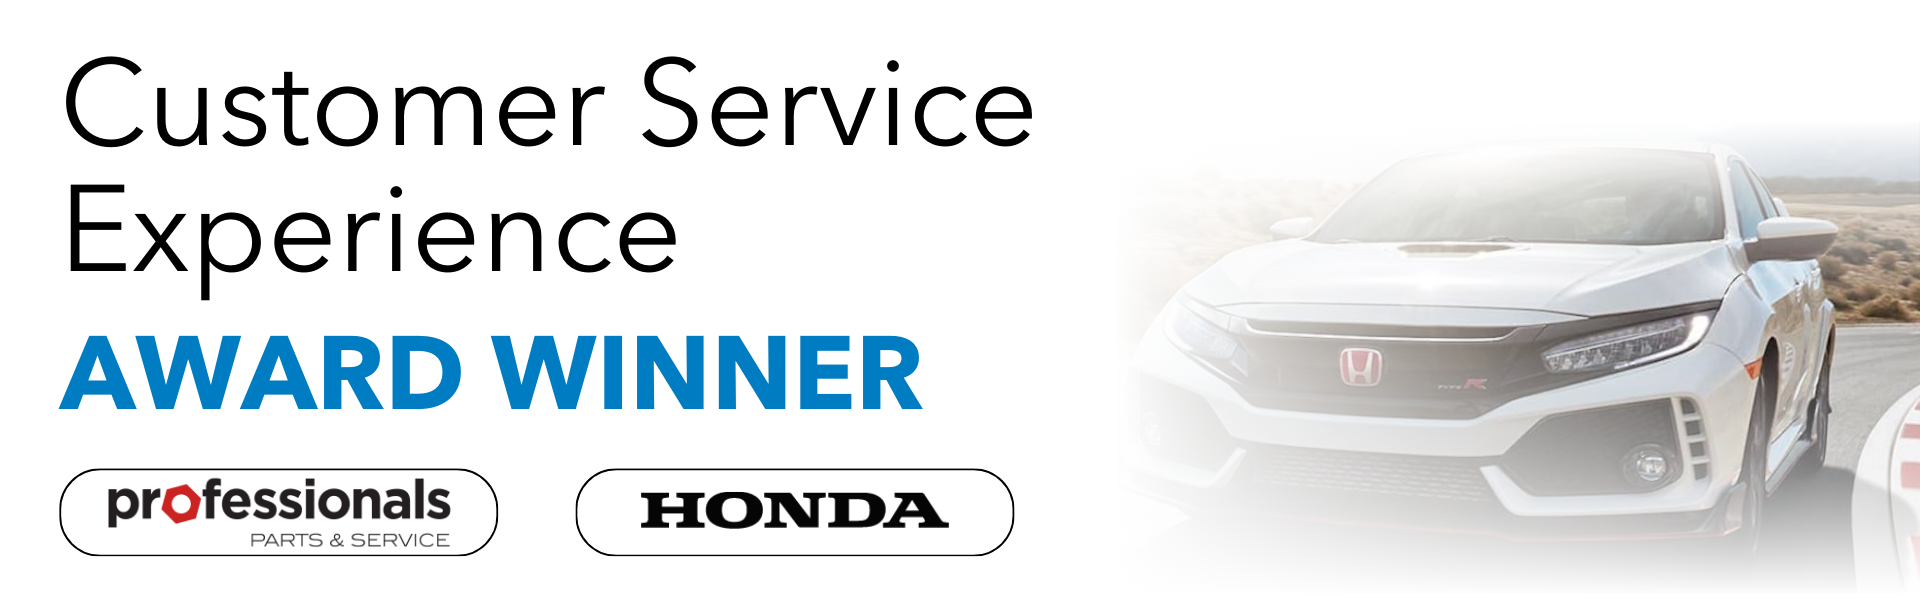 Customer Service Experience Award Winner